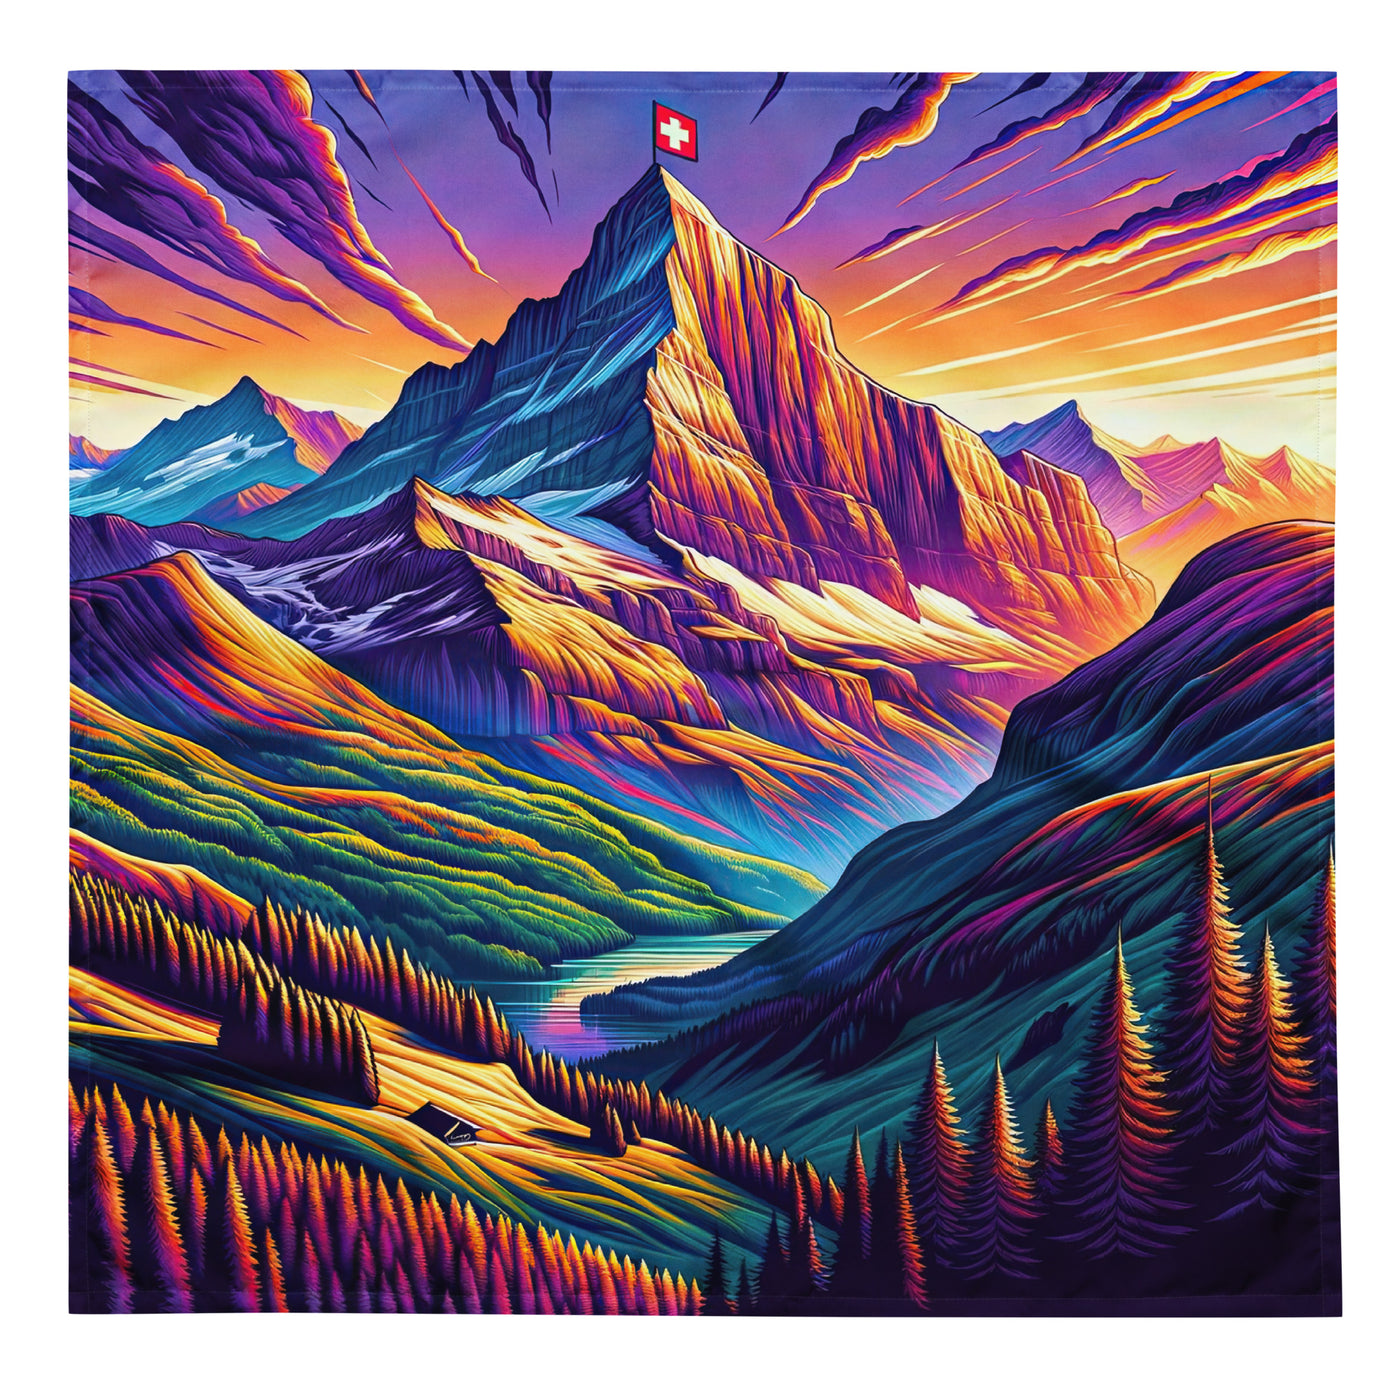 Bergpracht mit Schweizer Flagge: Farbenfrohe Illustration einer Berglandschaft - Bandana (All-Over Print) berge xxx yyy zzz L